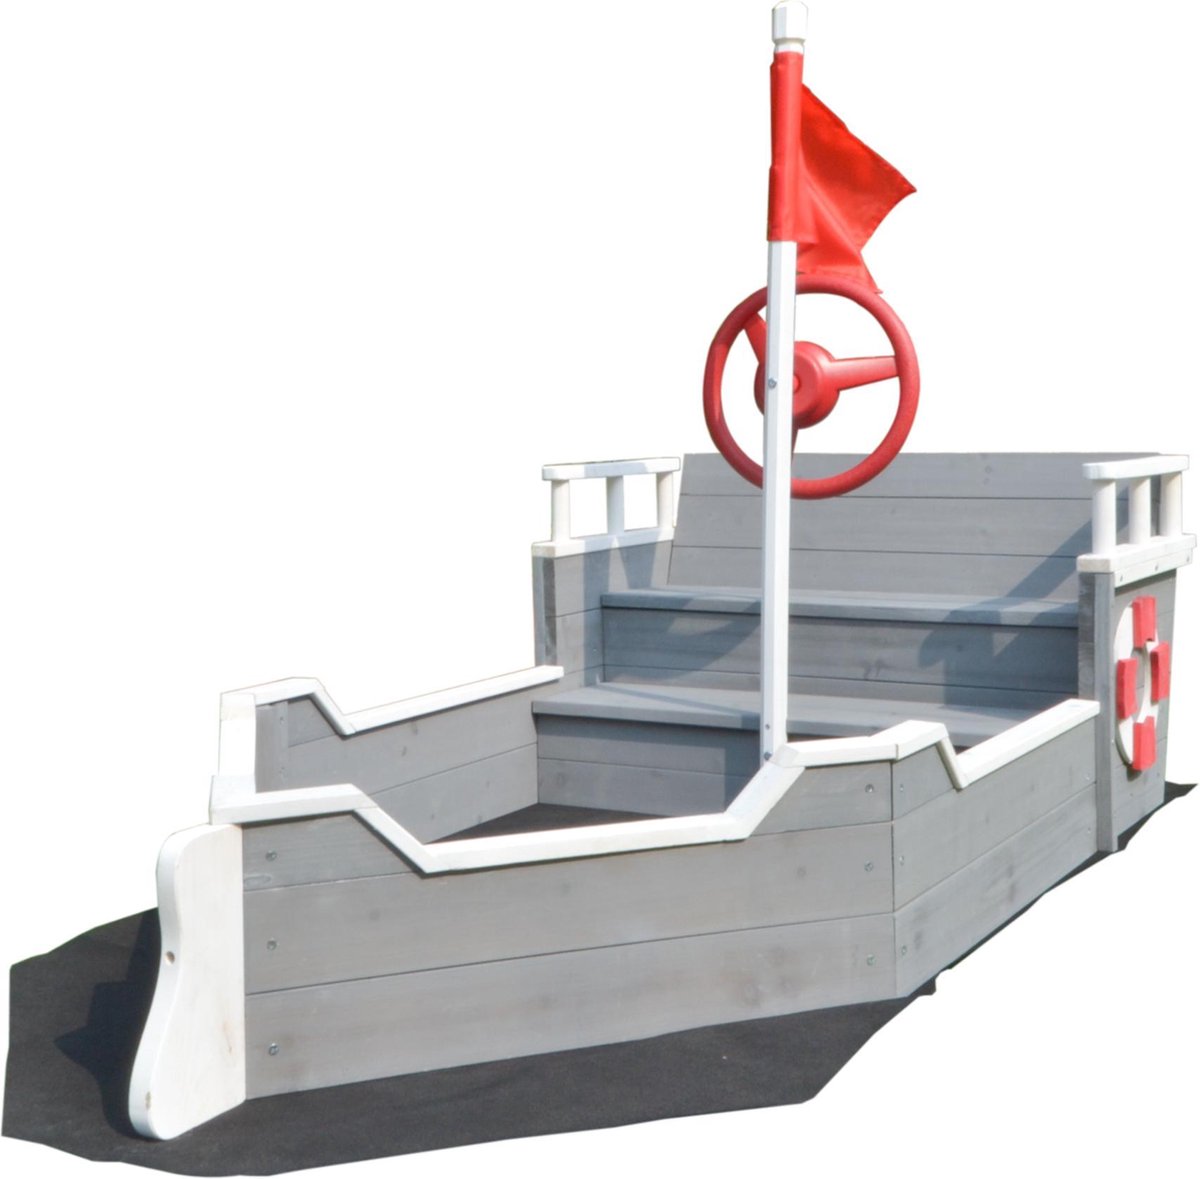 Zandbak Schip Boot Speeltoestel 1950 X 940 X 1355mm Bol Com